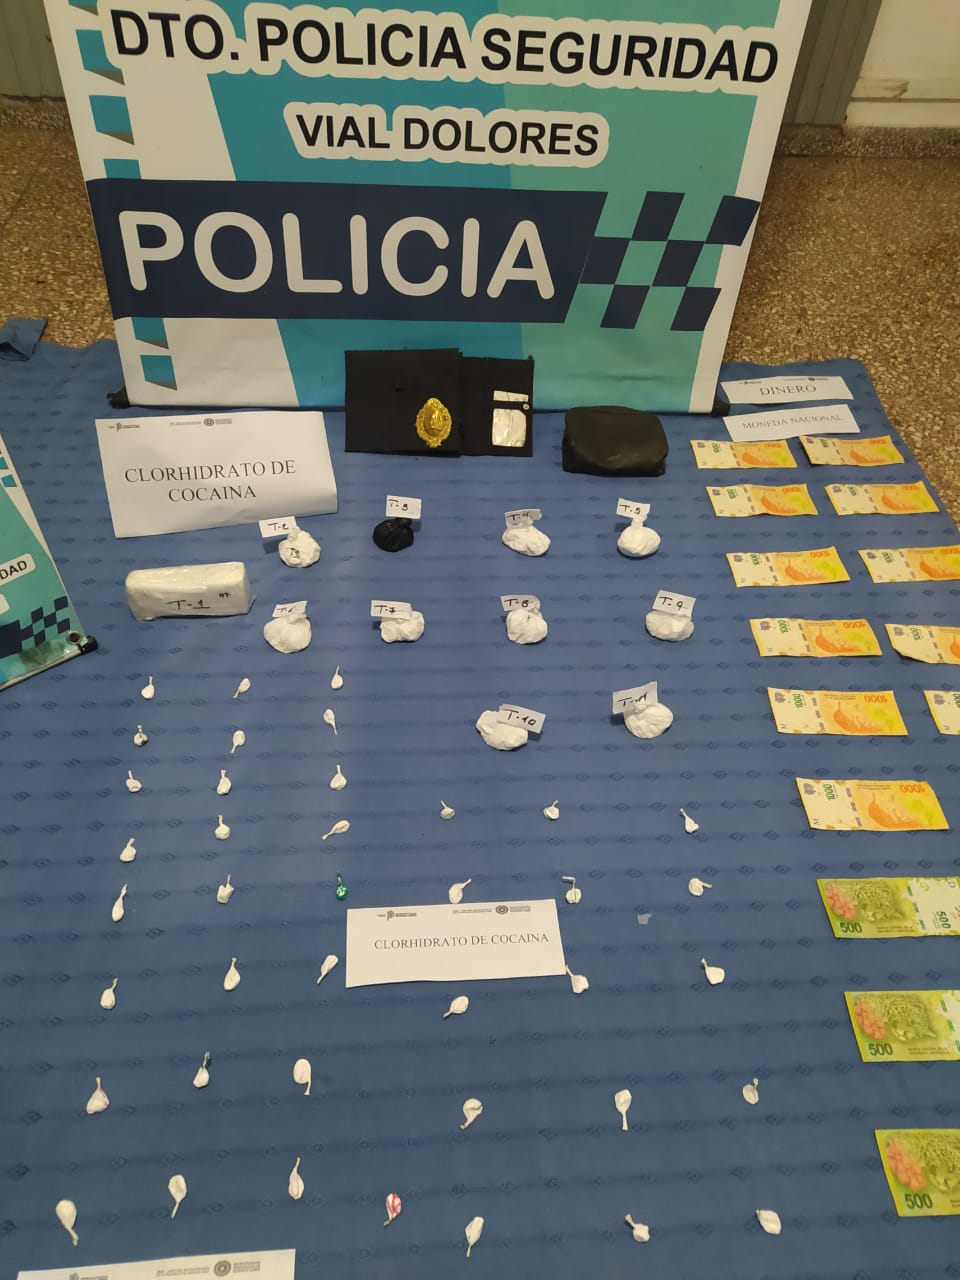 Policia Vial Detienen automovilista oriundo de San Martin con cocaina